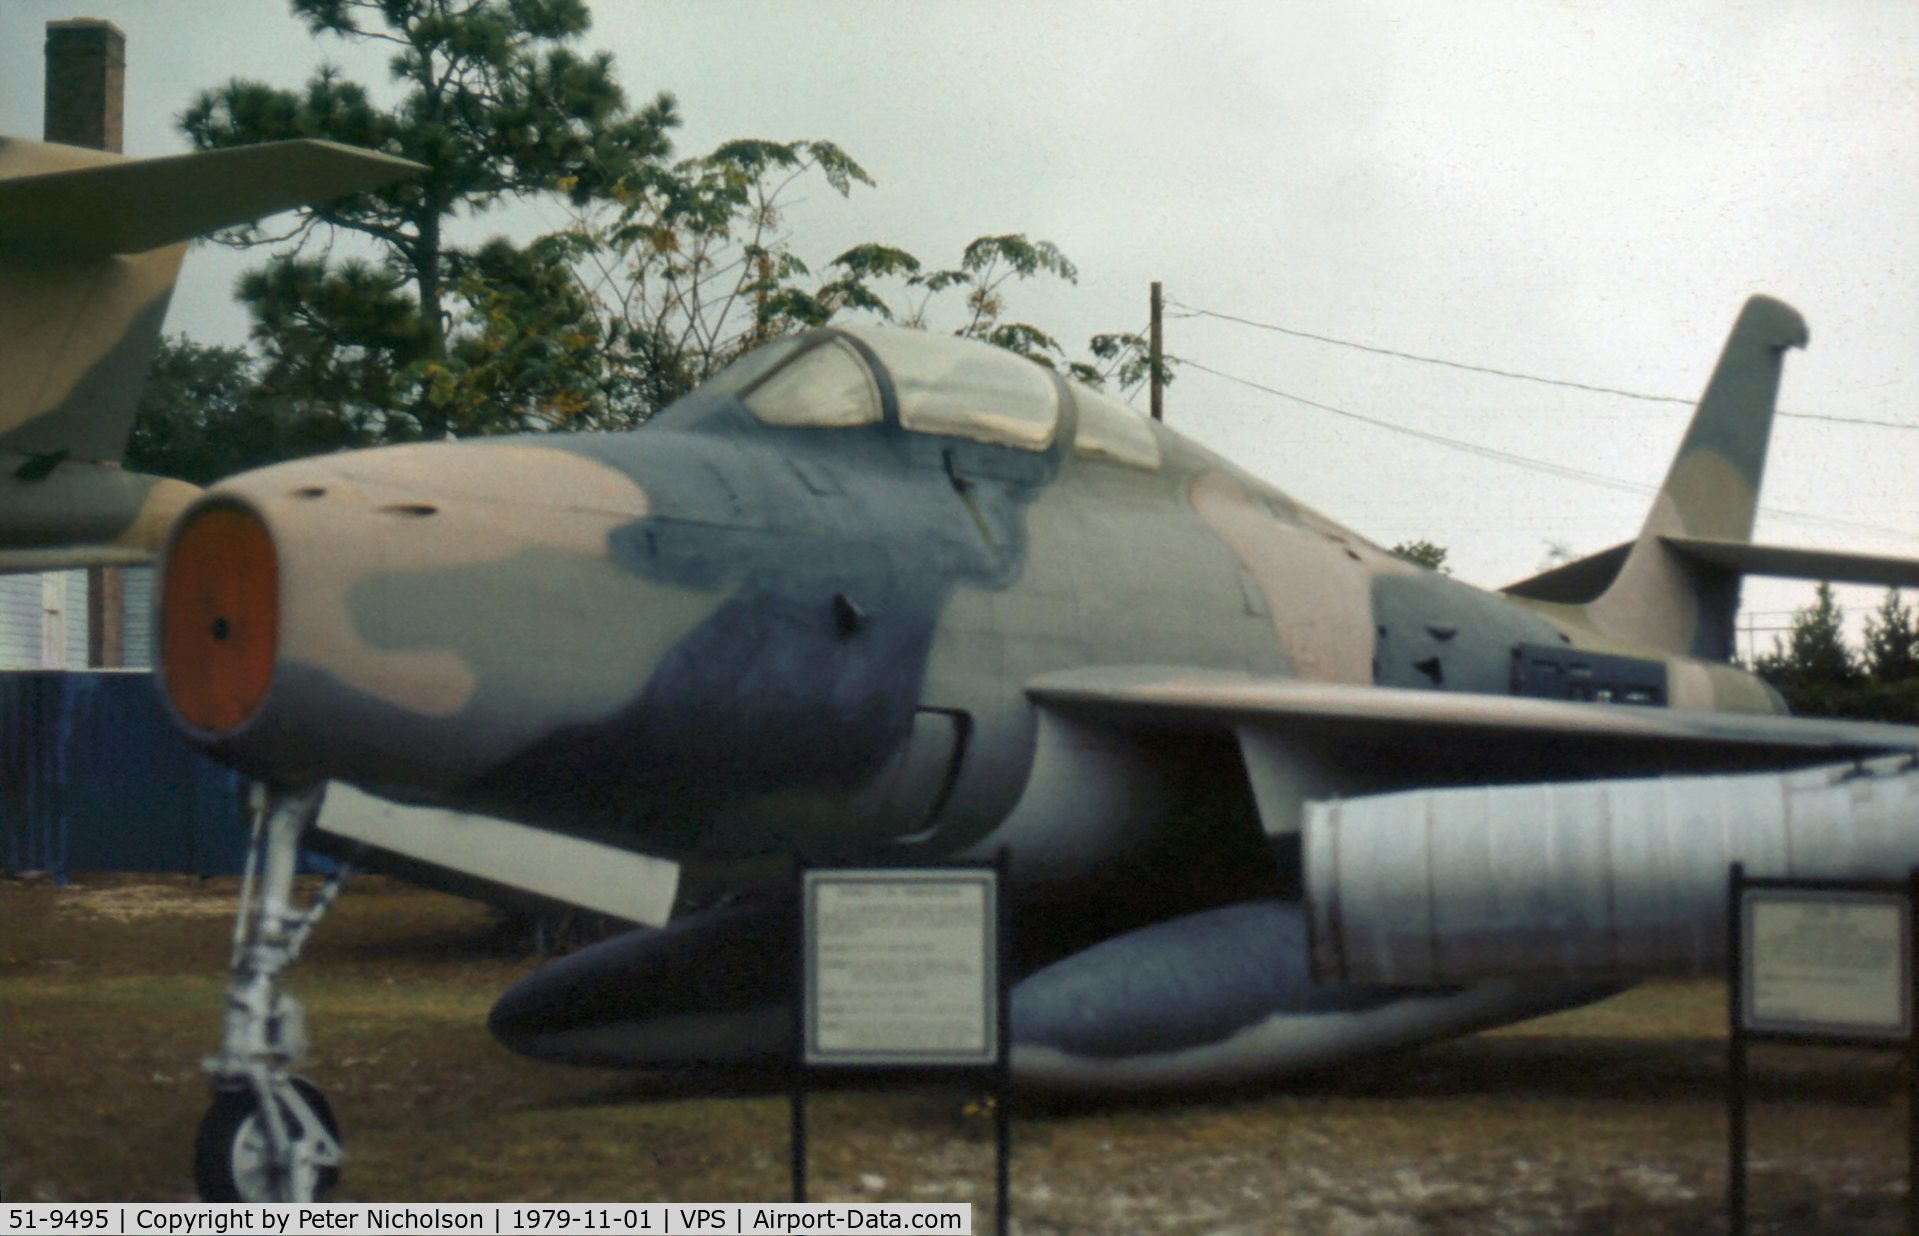 51-9495, 1951 General Motors F-84F-35-GK Thunderstreak C/N Not found 51-9495, F-84F Thunderstreak as displayed at the USAF Armament Museum in November 1979.